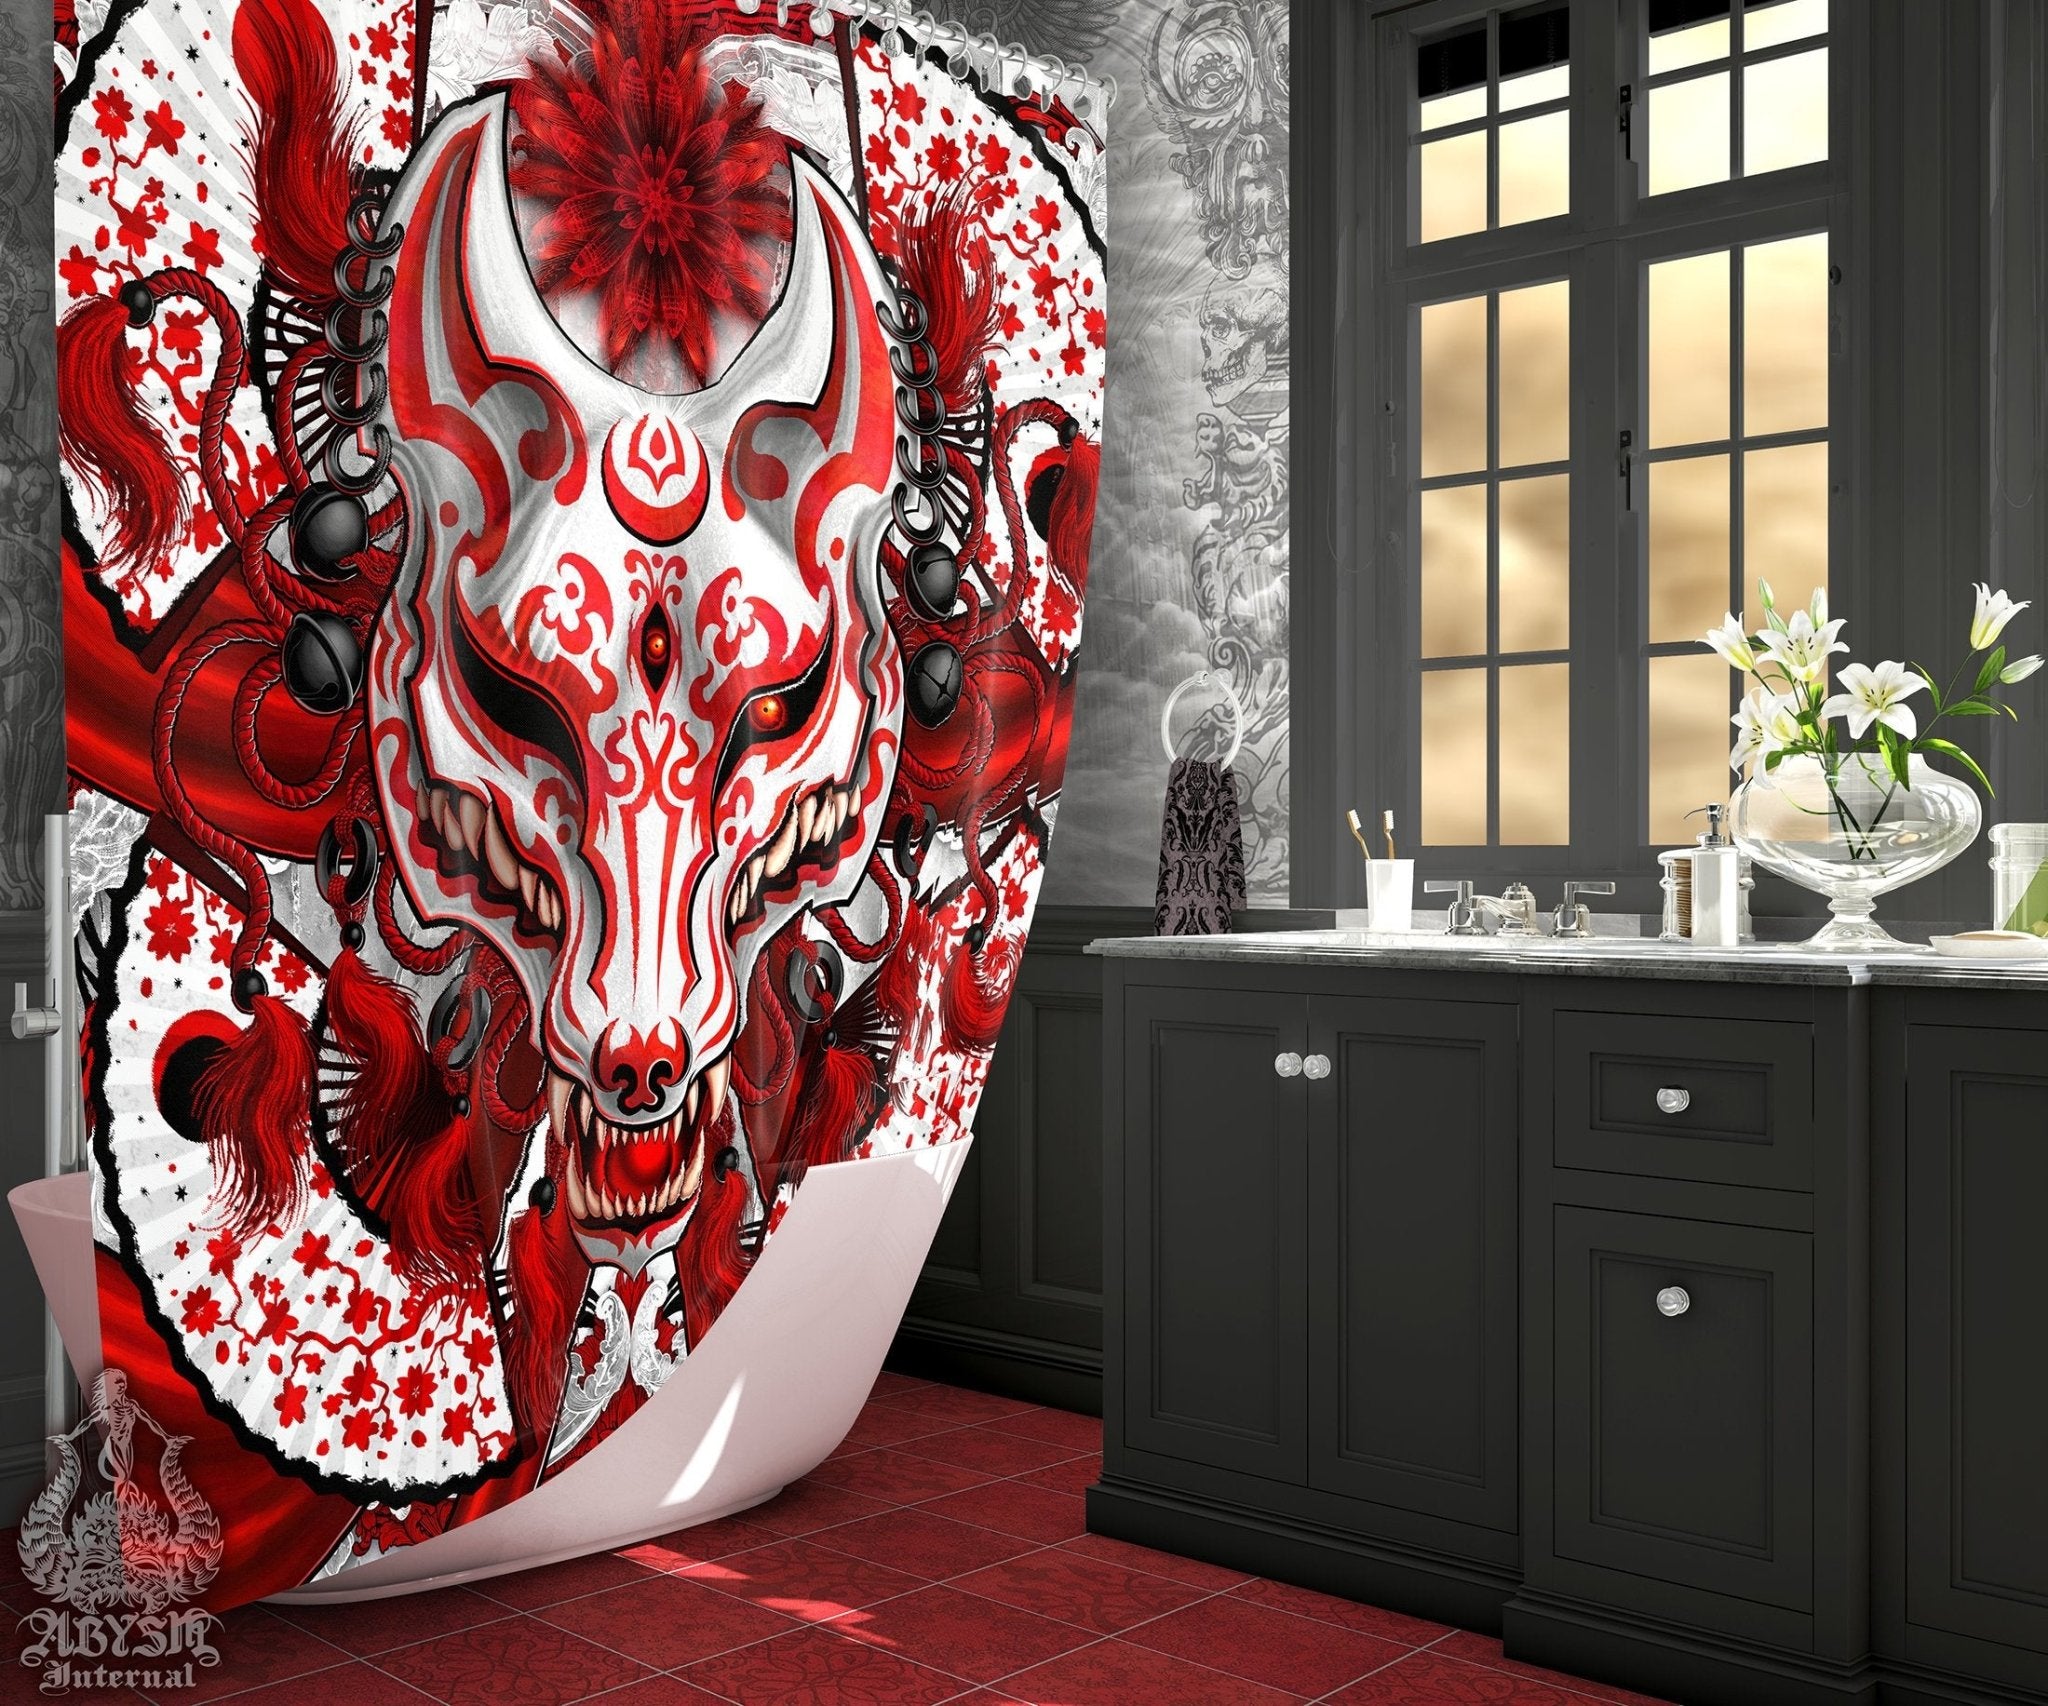 Kitsune Shower Curtain, Okami, Fantasy Bathroom Decor, Gamer, Anime, Fox Mask Art - Bloody Black - Abysm Internal